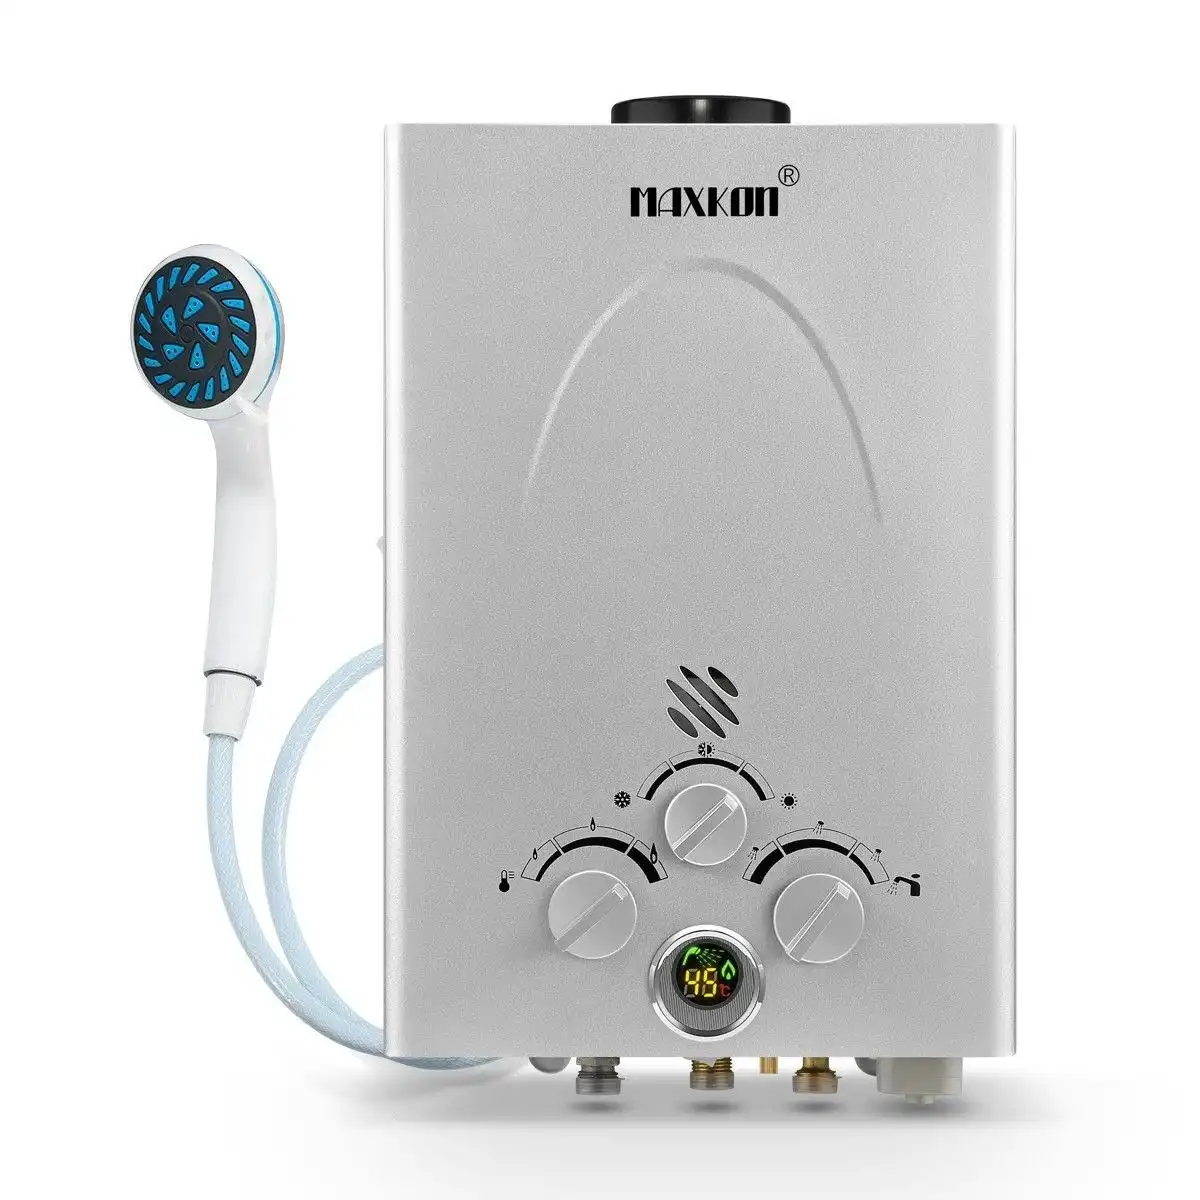 Maxkon  520L per Hr Portable Outdoor Gas Water Heater Instant Shower – Sliver